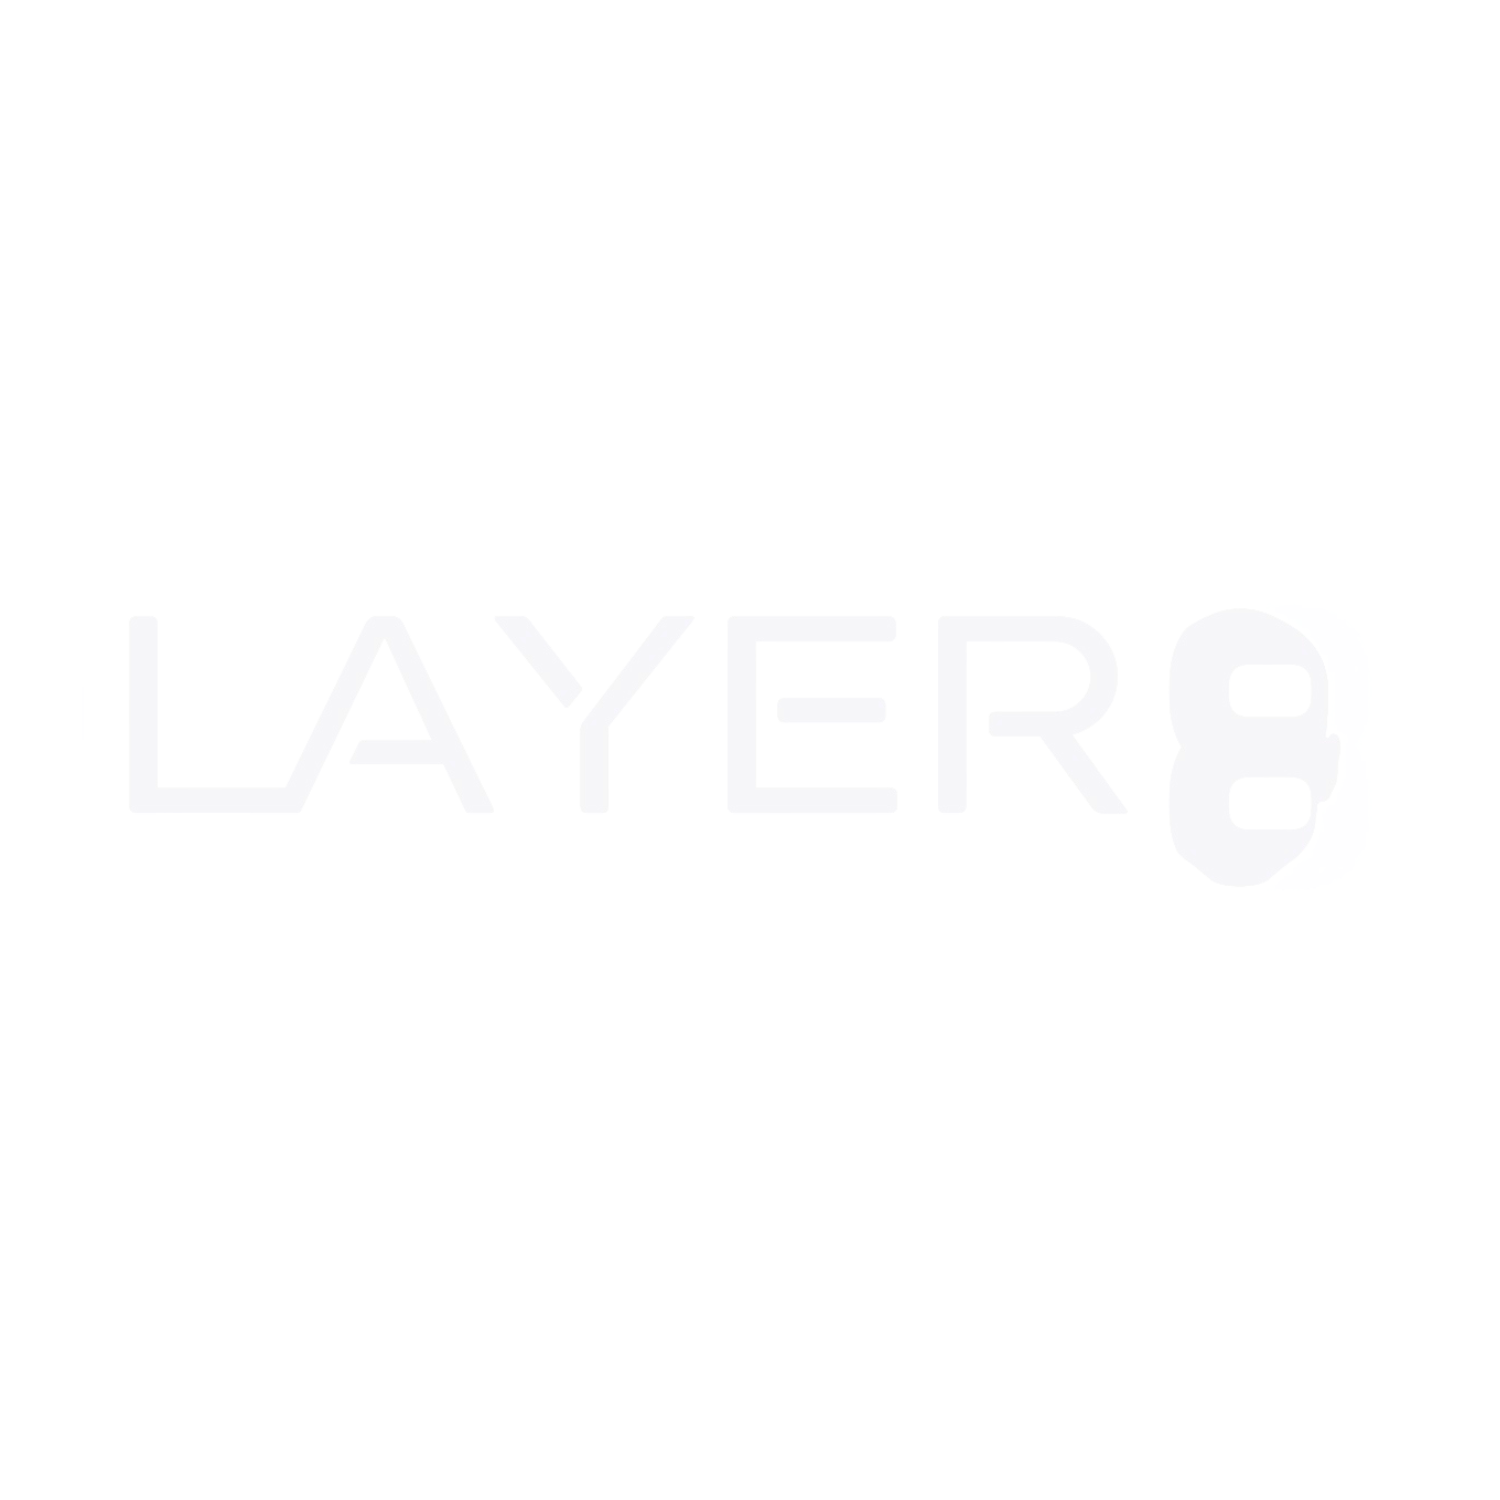 Layer 8 Inc.